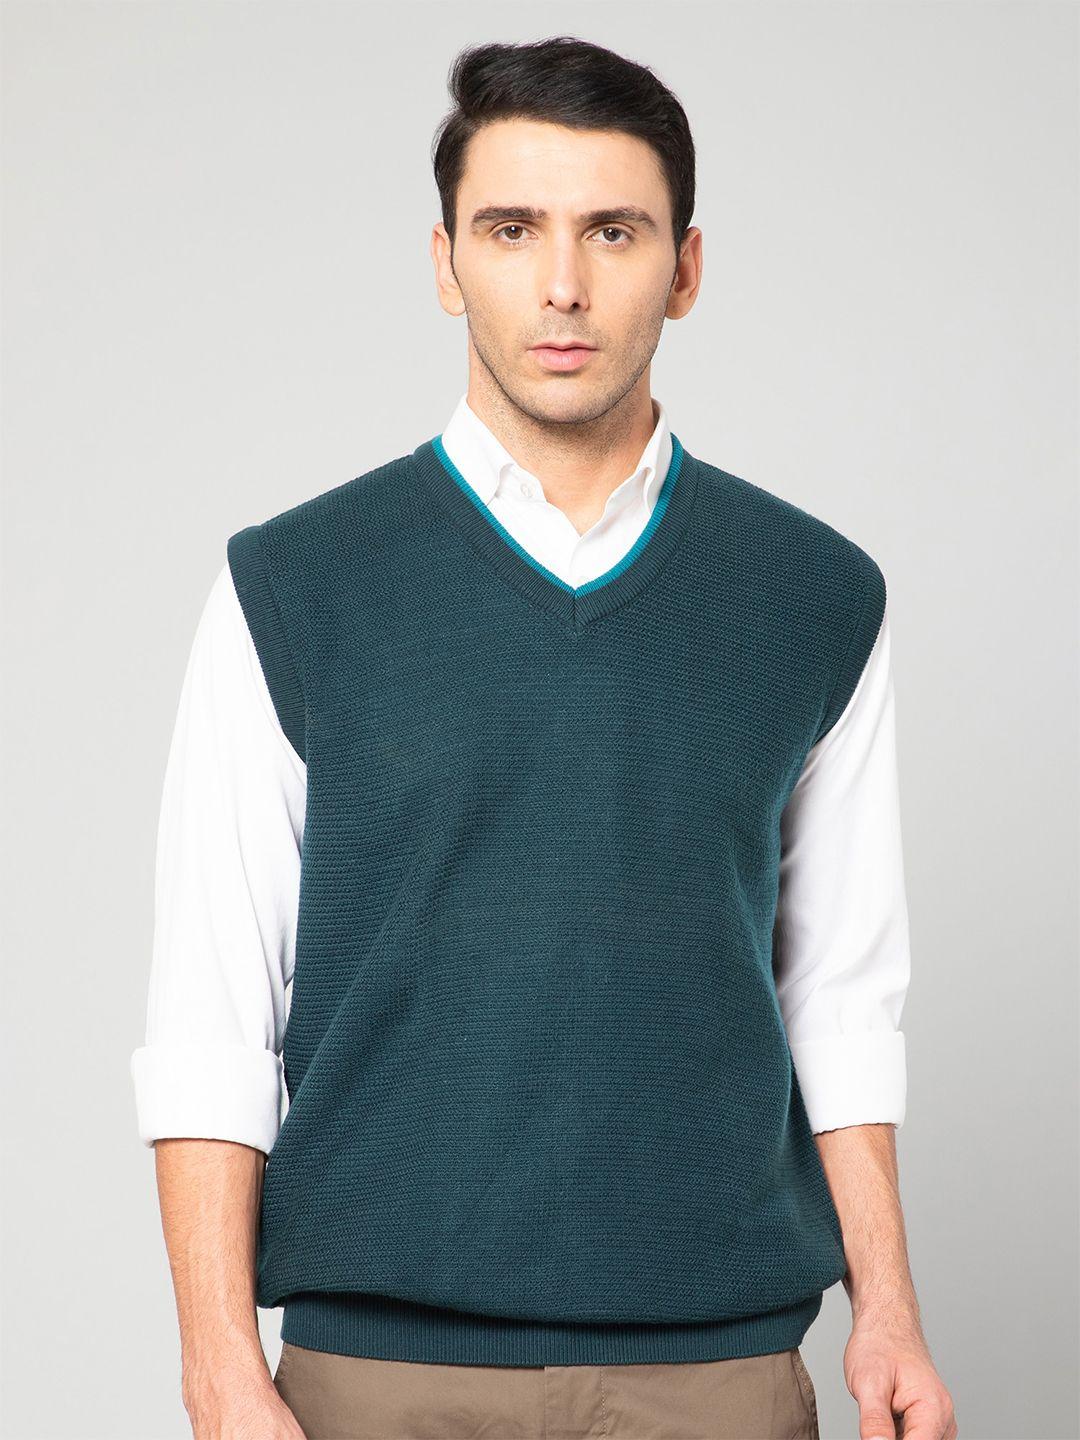 cantabil-men-teal-blue-acrylic-sweater-vest